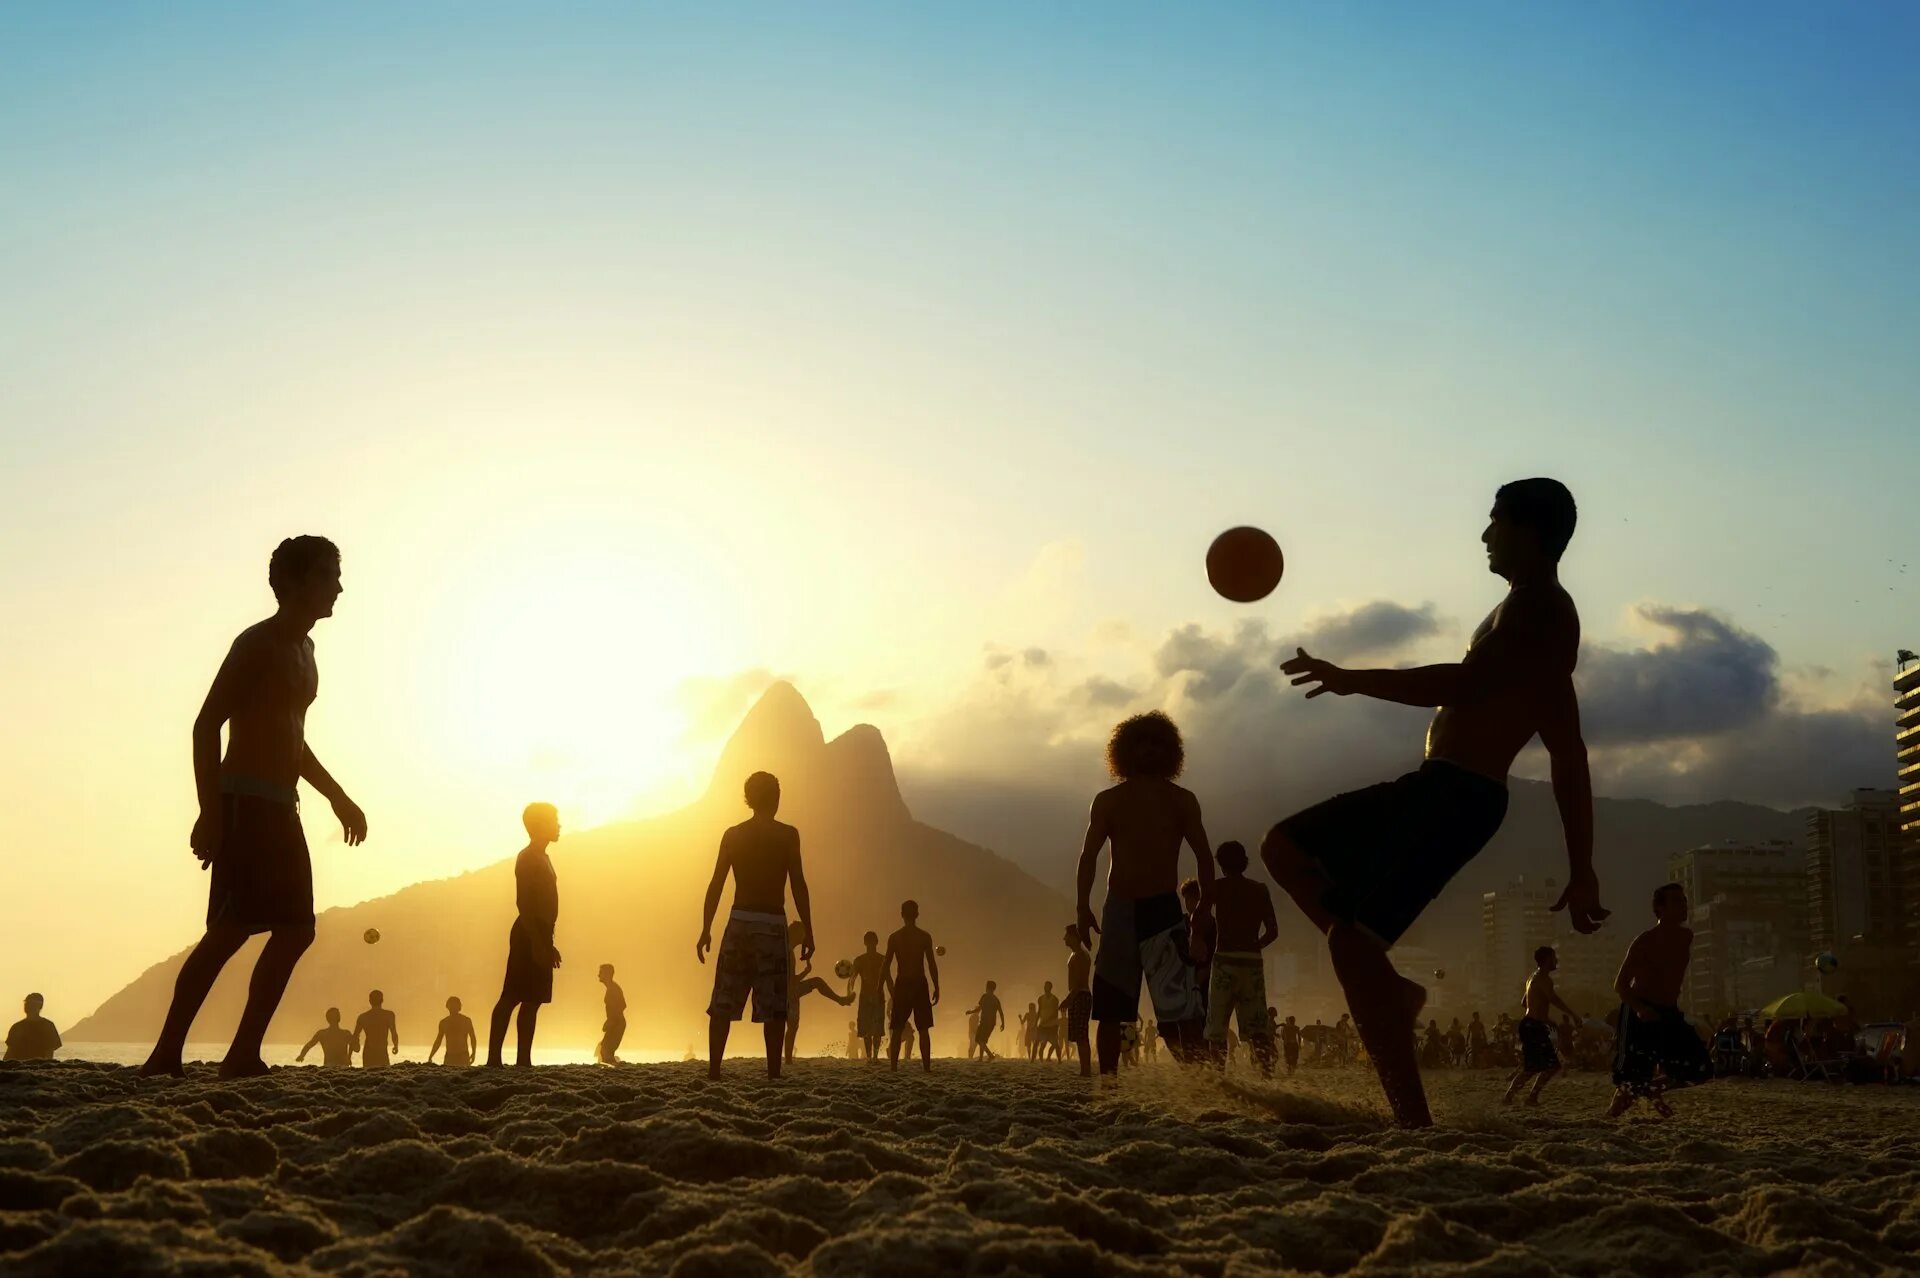 Beach soccer world. Футбол на пляже. Футбол летом. Футбол солнце. Дети играют в футбол.